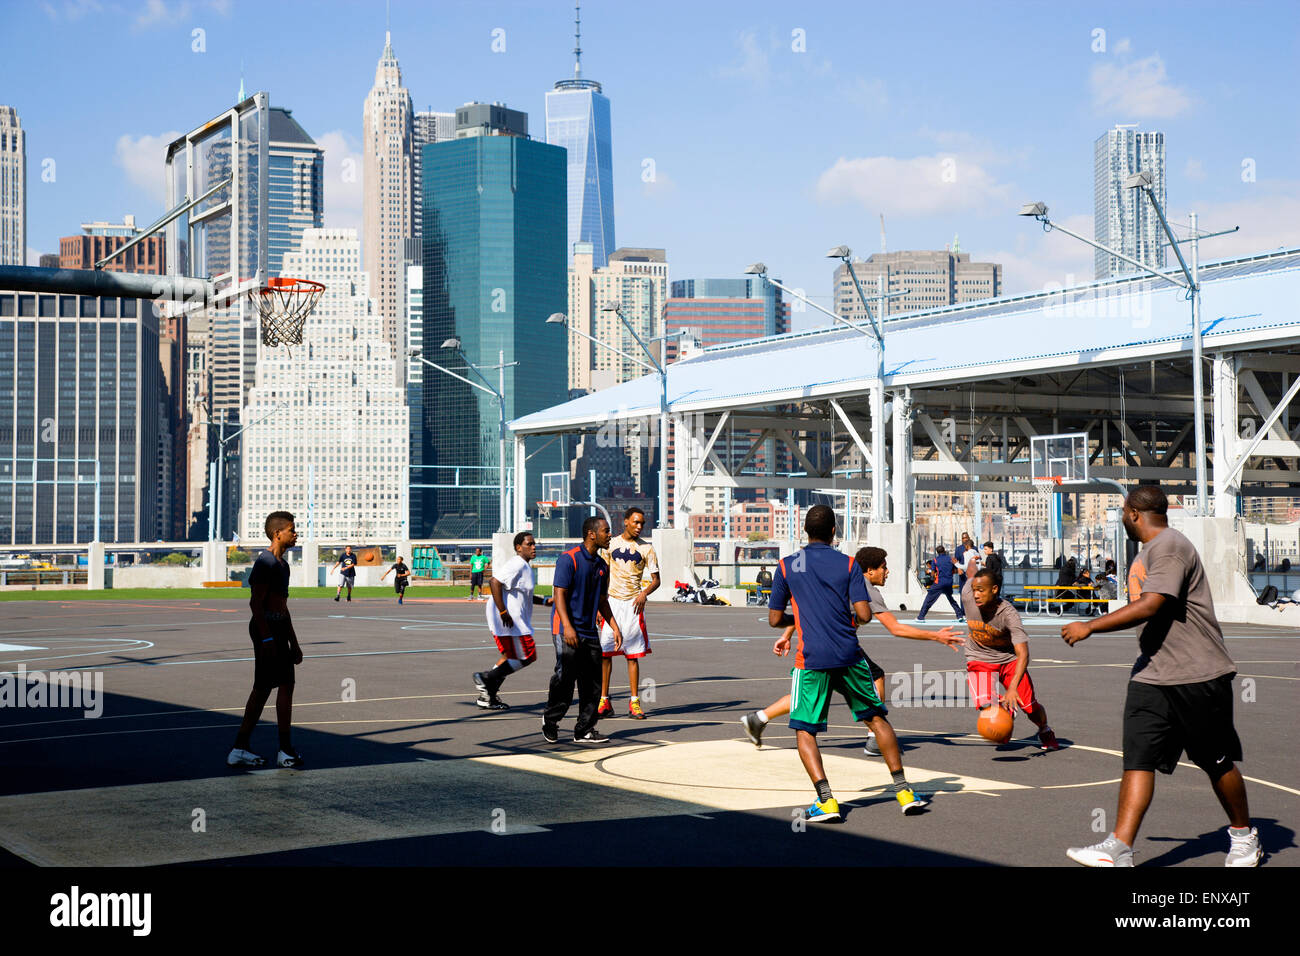 Basketball - Brooklyn Bridge Park